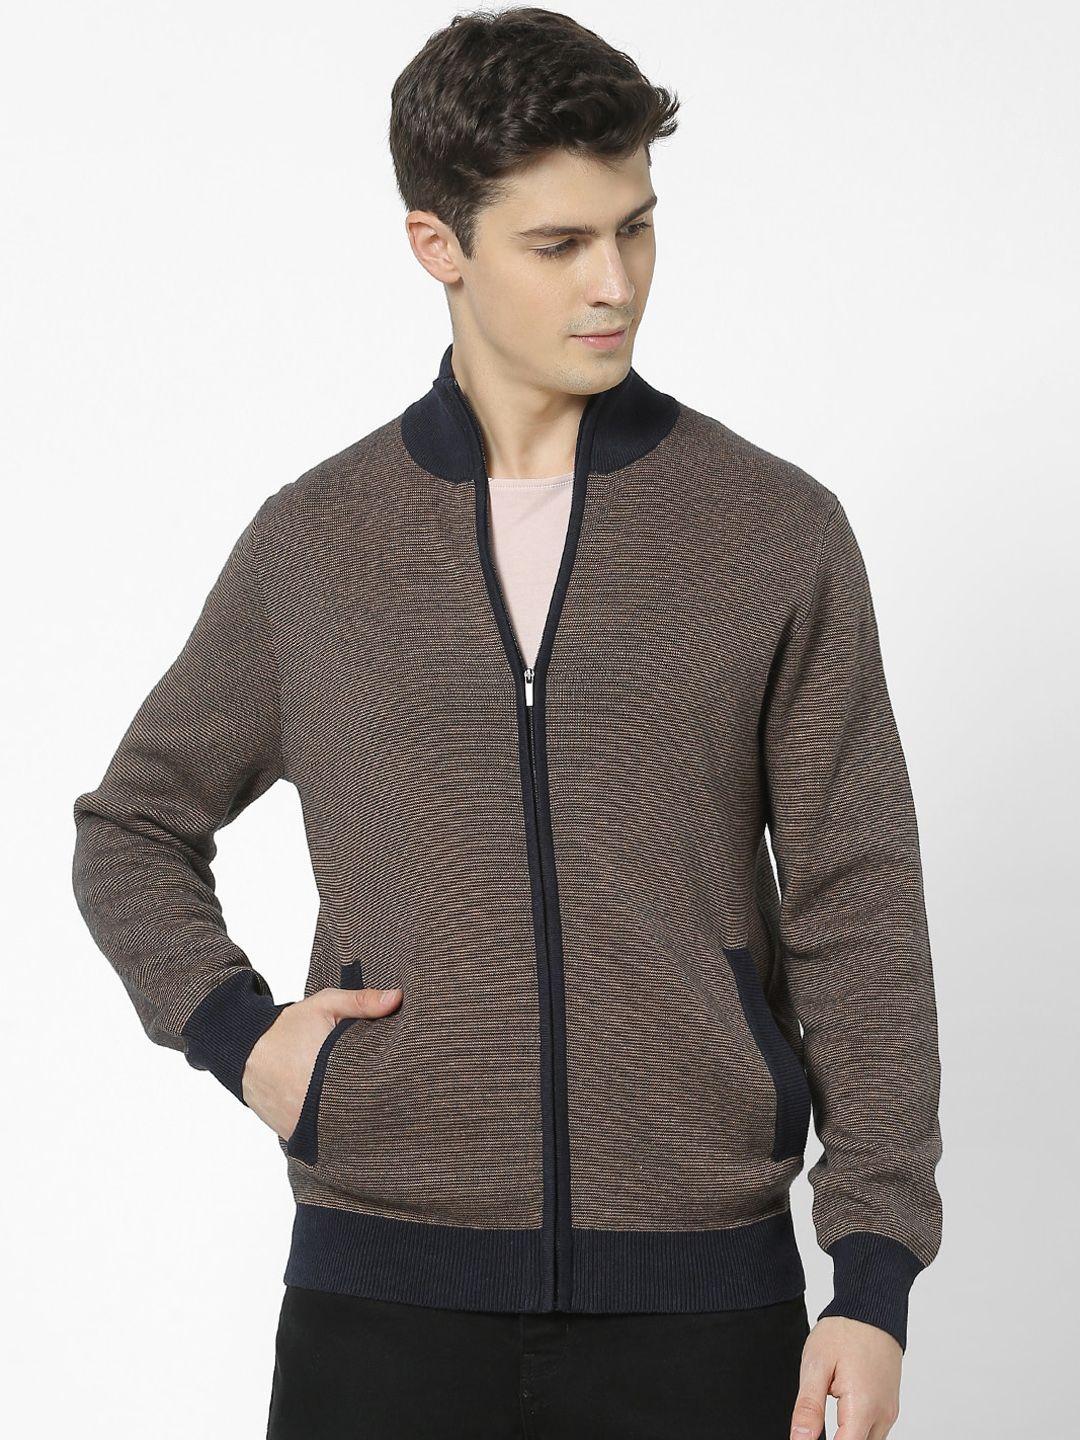 celio-men-navy-blue-&-brown-self-design-cardigan-sweater